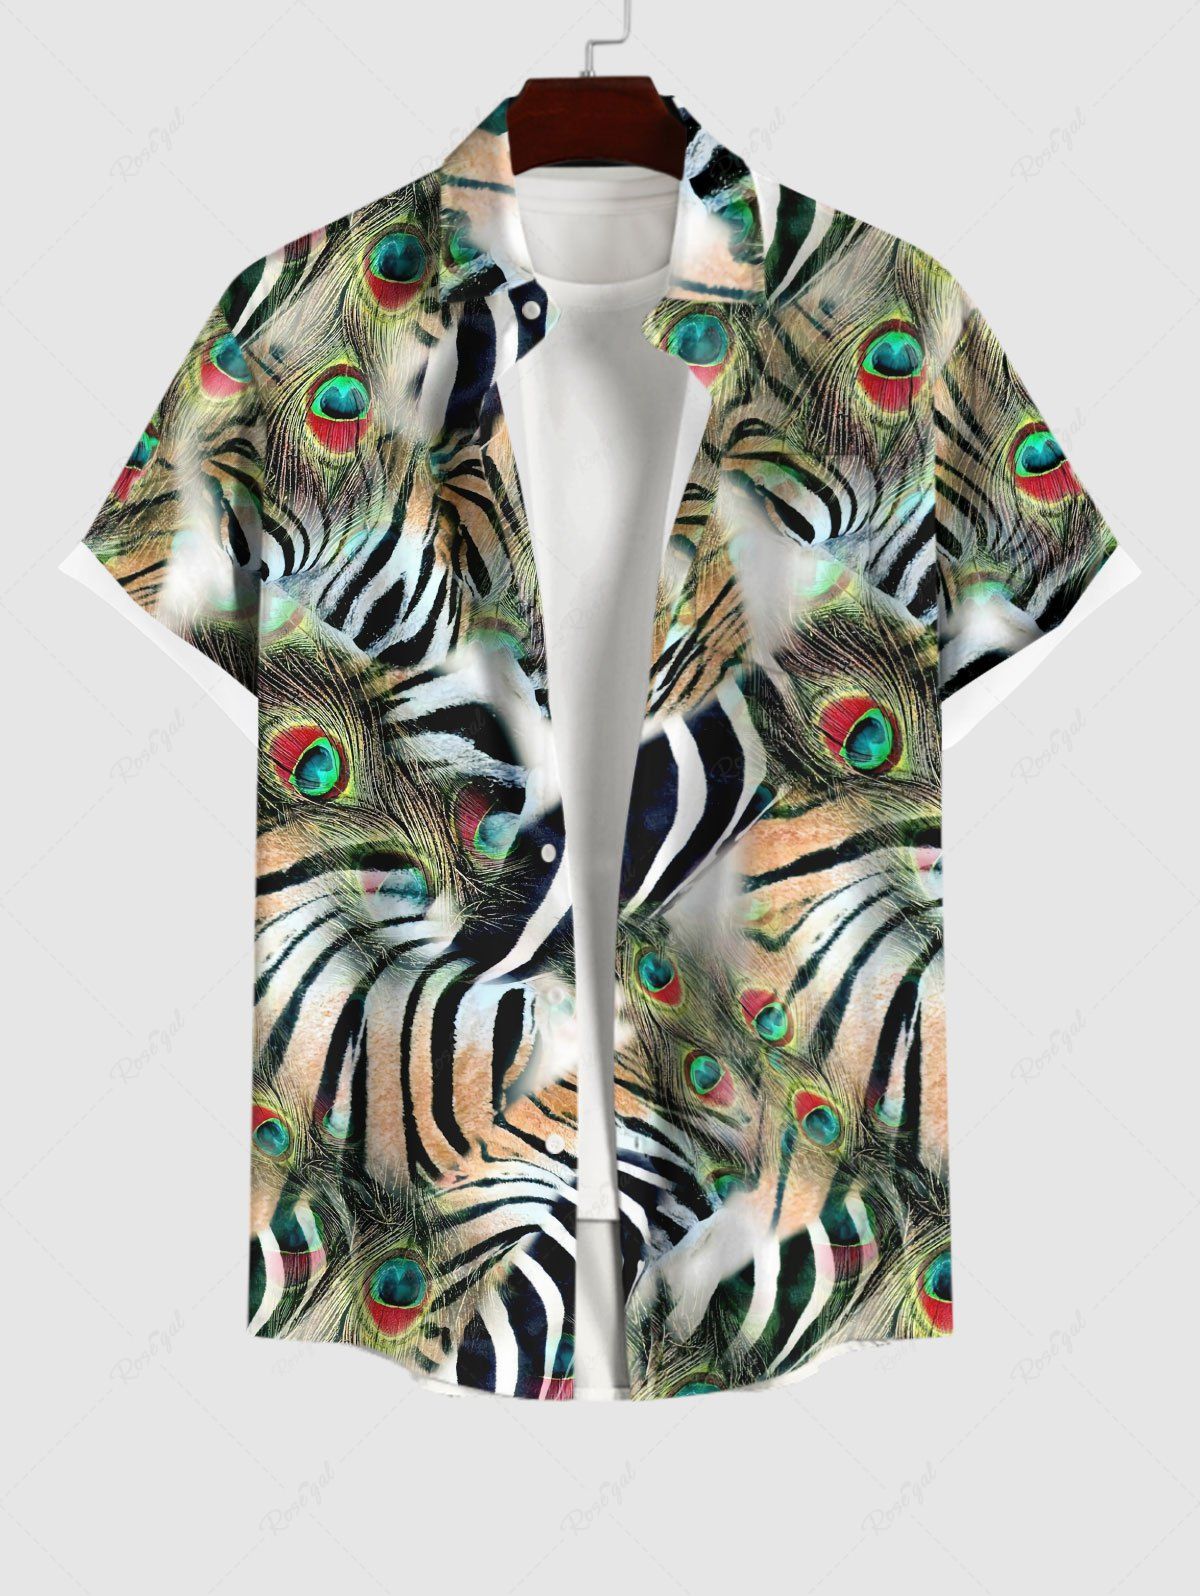 Hawaii Plus Size Turn-down Collar Peacock Feather Tiger Zebra Striped Print Button Pocket Shirt For Men Vert 4XL